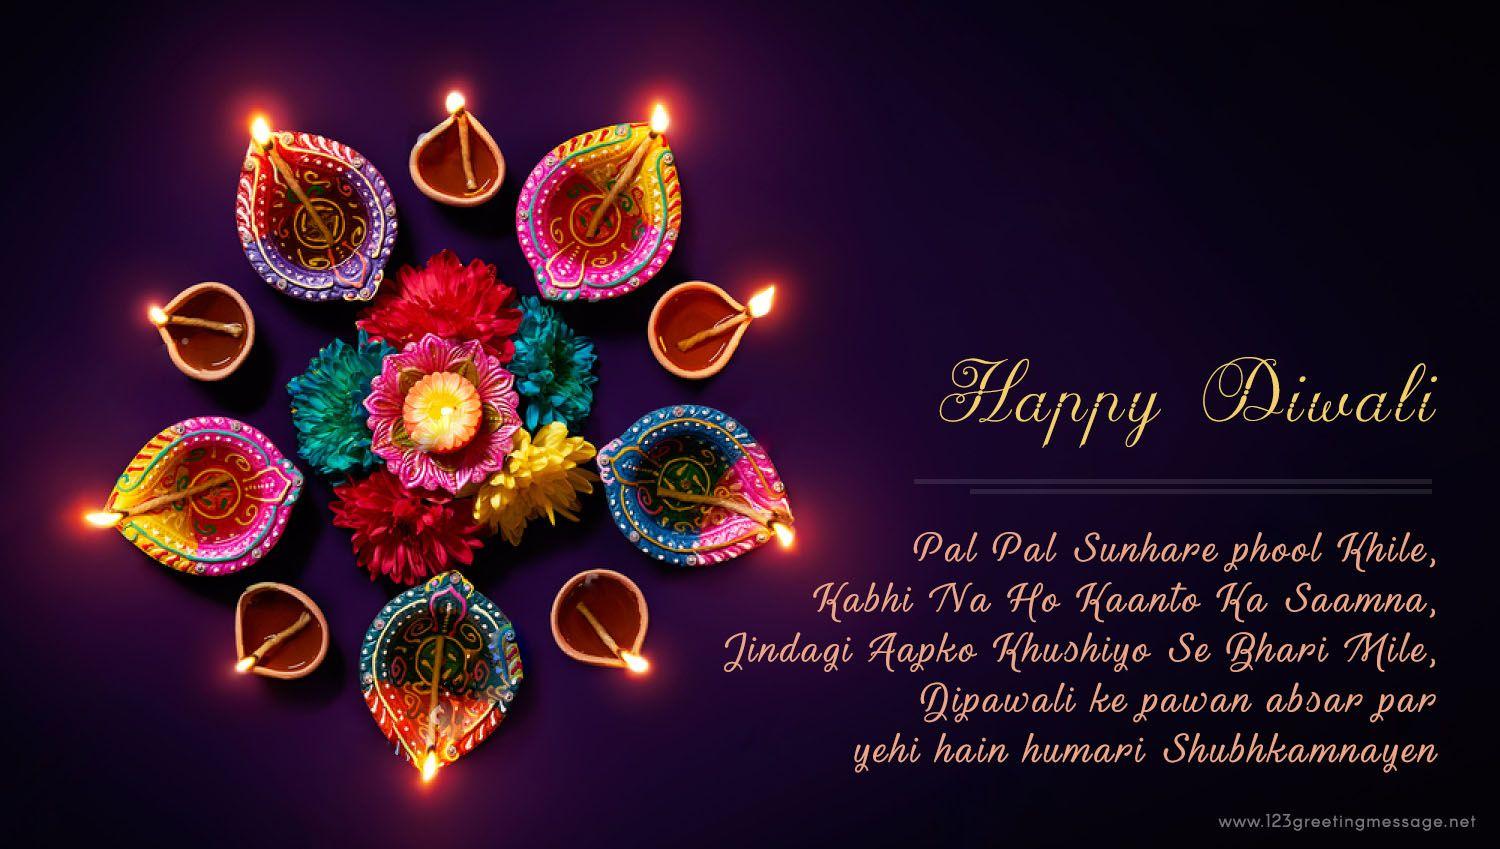 Happy {Deepavali} Diwali Image, 3D GIF, HD Pics & Photo 2019